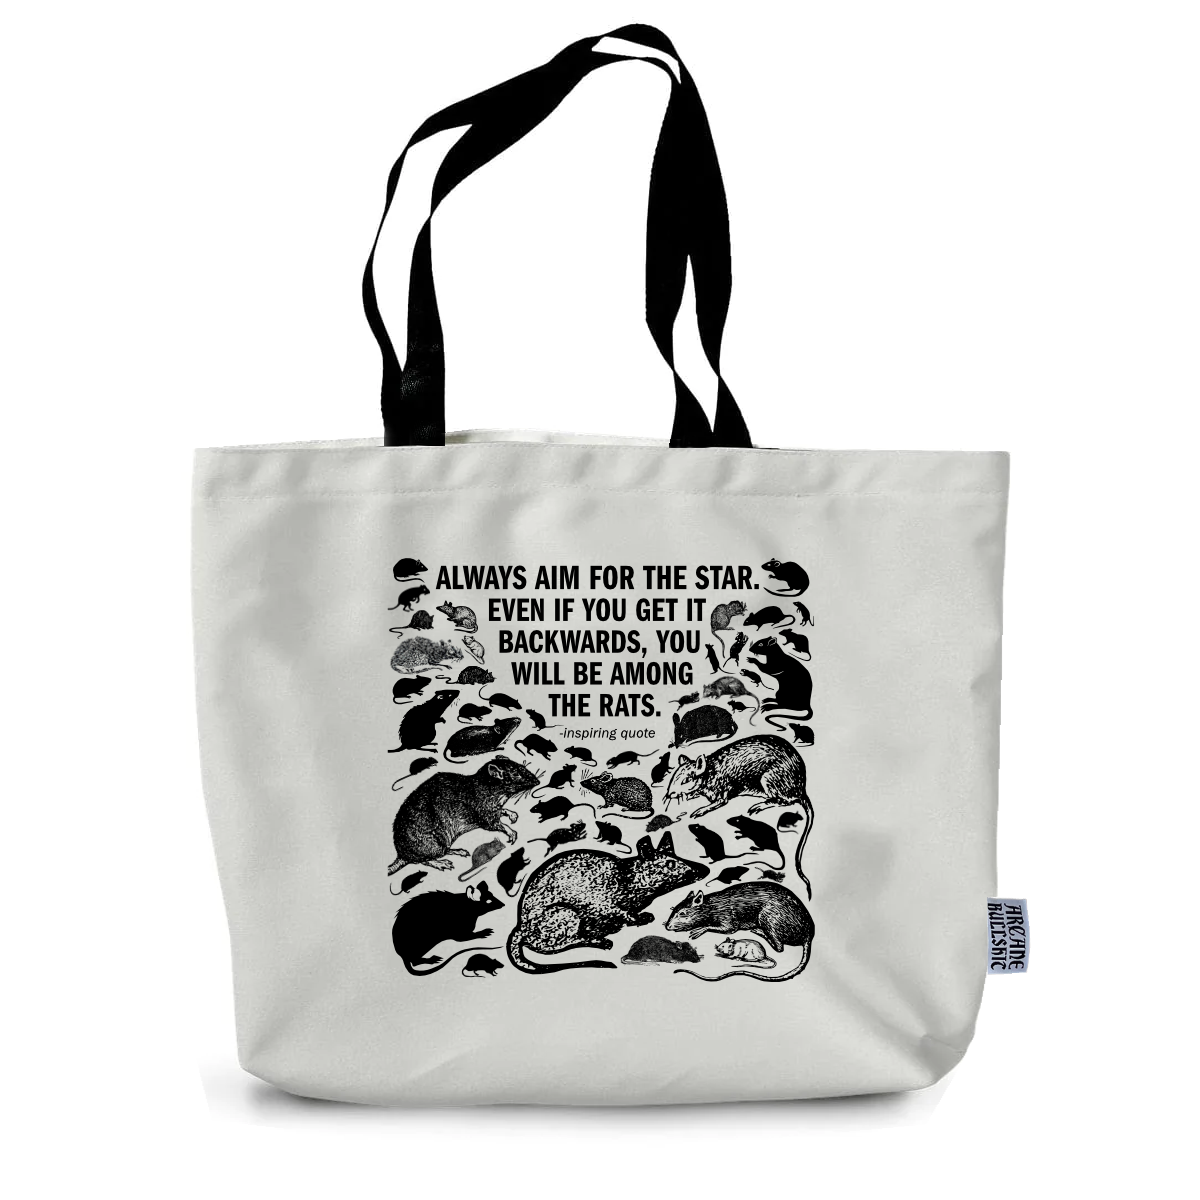 "The Rats" jumbo tote bag